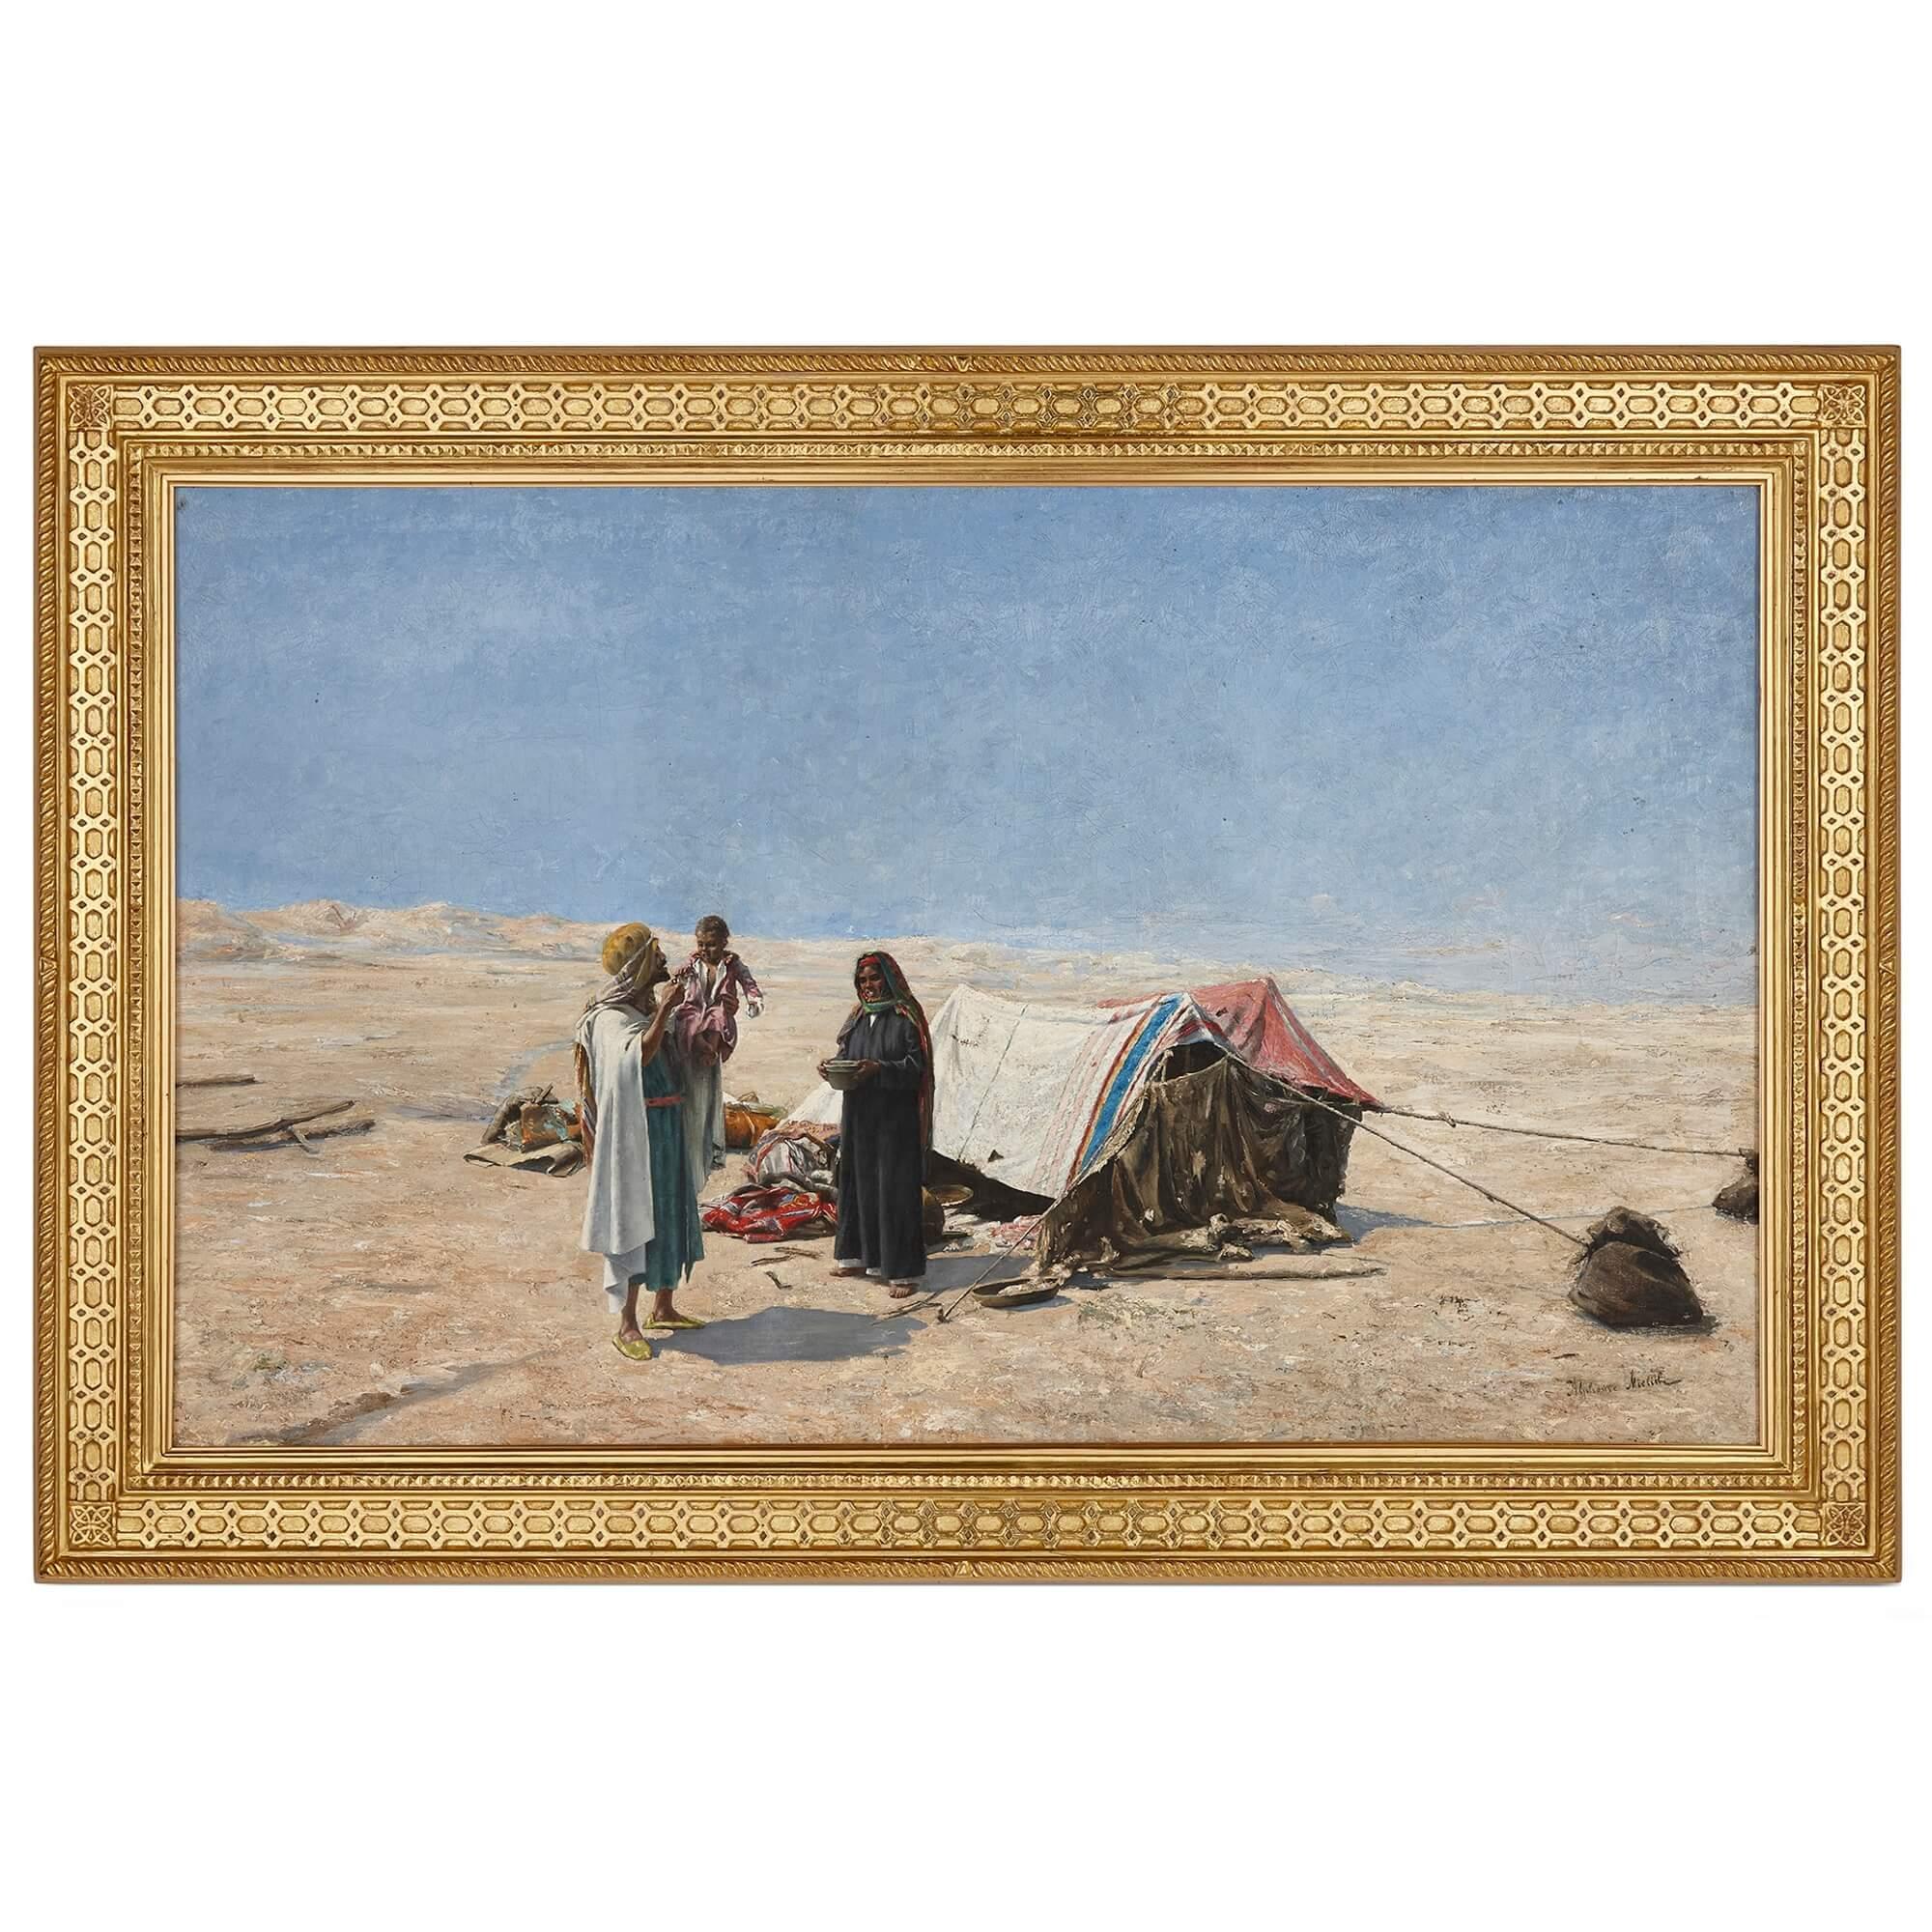 Orientalist oil painting of Bedouins in a desert by Alphons Leopold Mielich
Austrian, c.1900
Canvas: Height 68cm, width 111cm
Frame: Height 79cm, width 121cm, depth 4cm

Painted by the famous Orientalist painter Alphons Leopold Mielich (1863-1929),